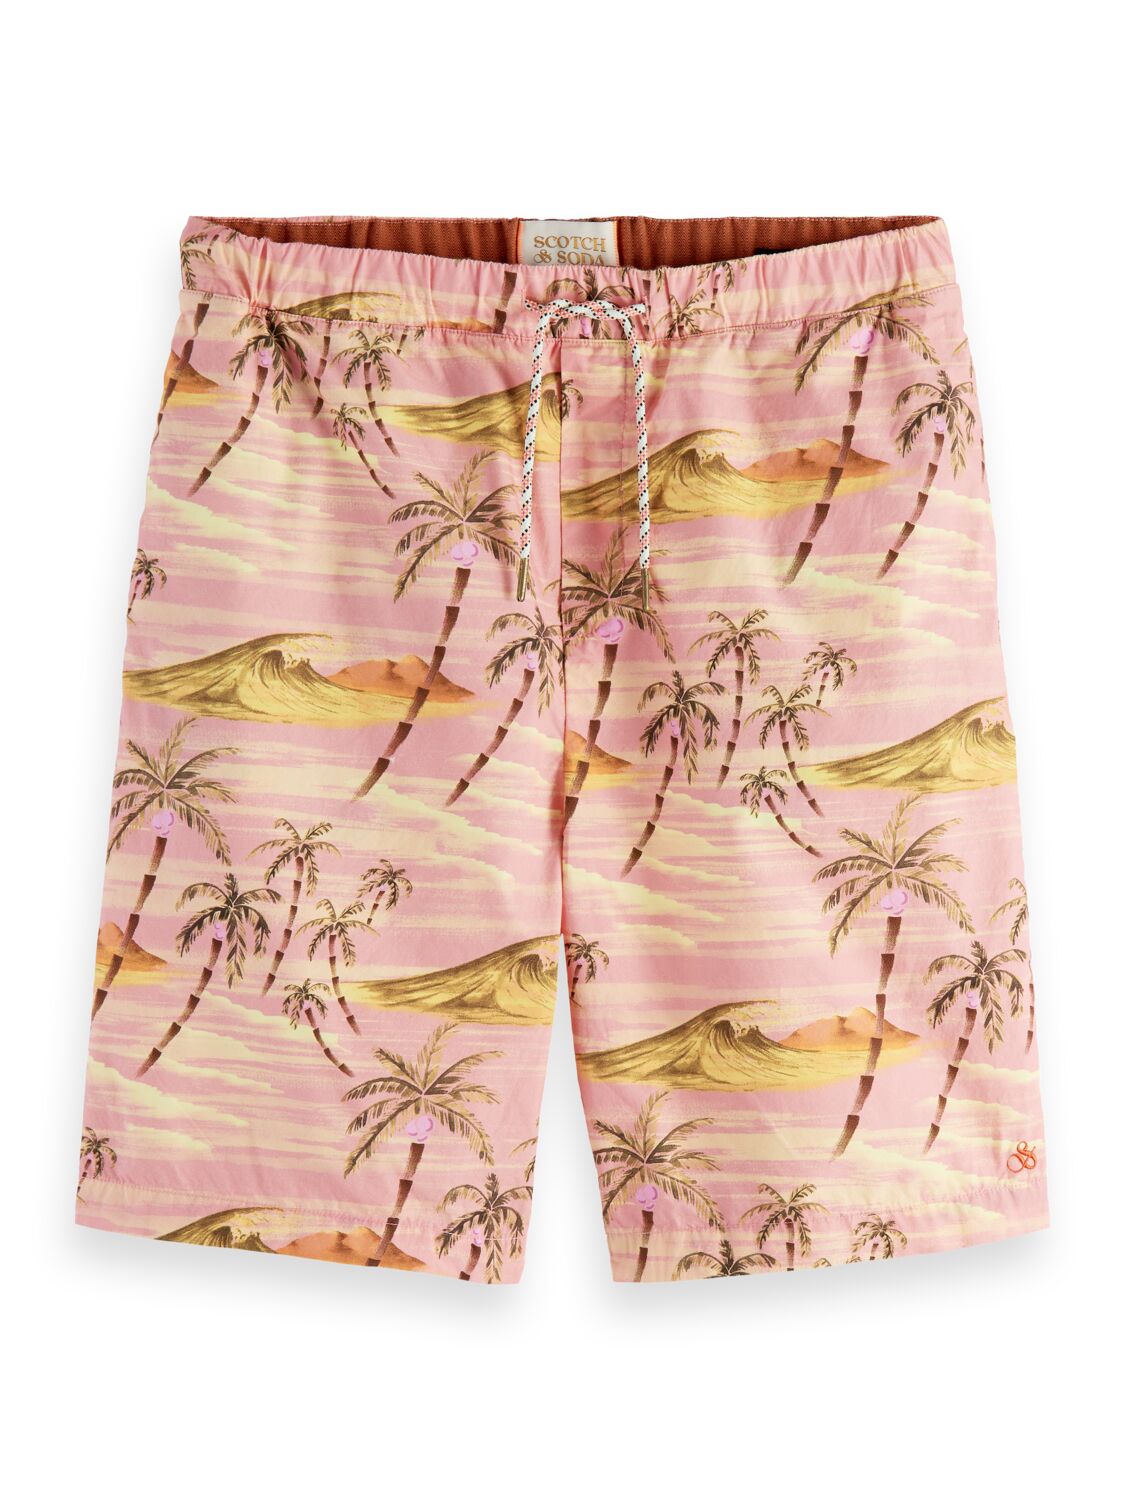 Scotch and Soda Print Bermuda Shorts - Pink Floral